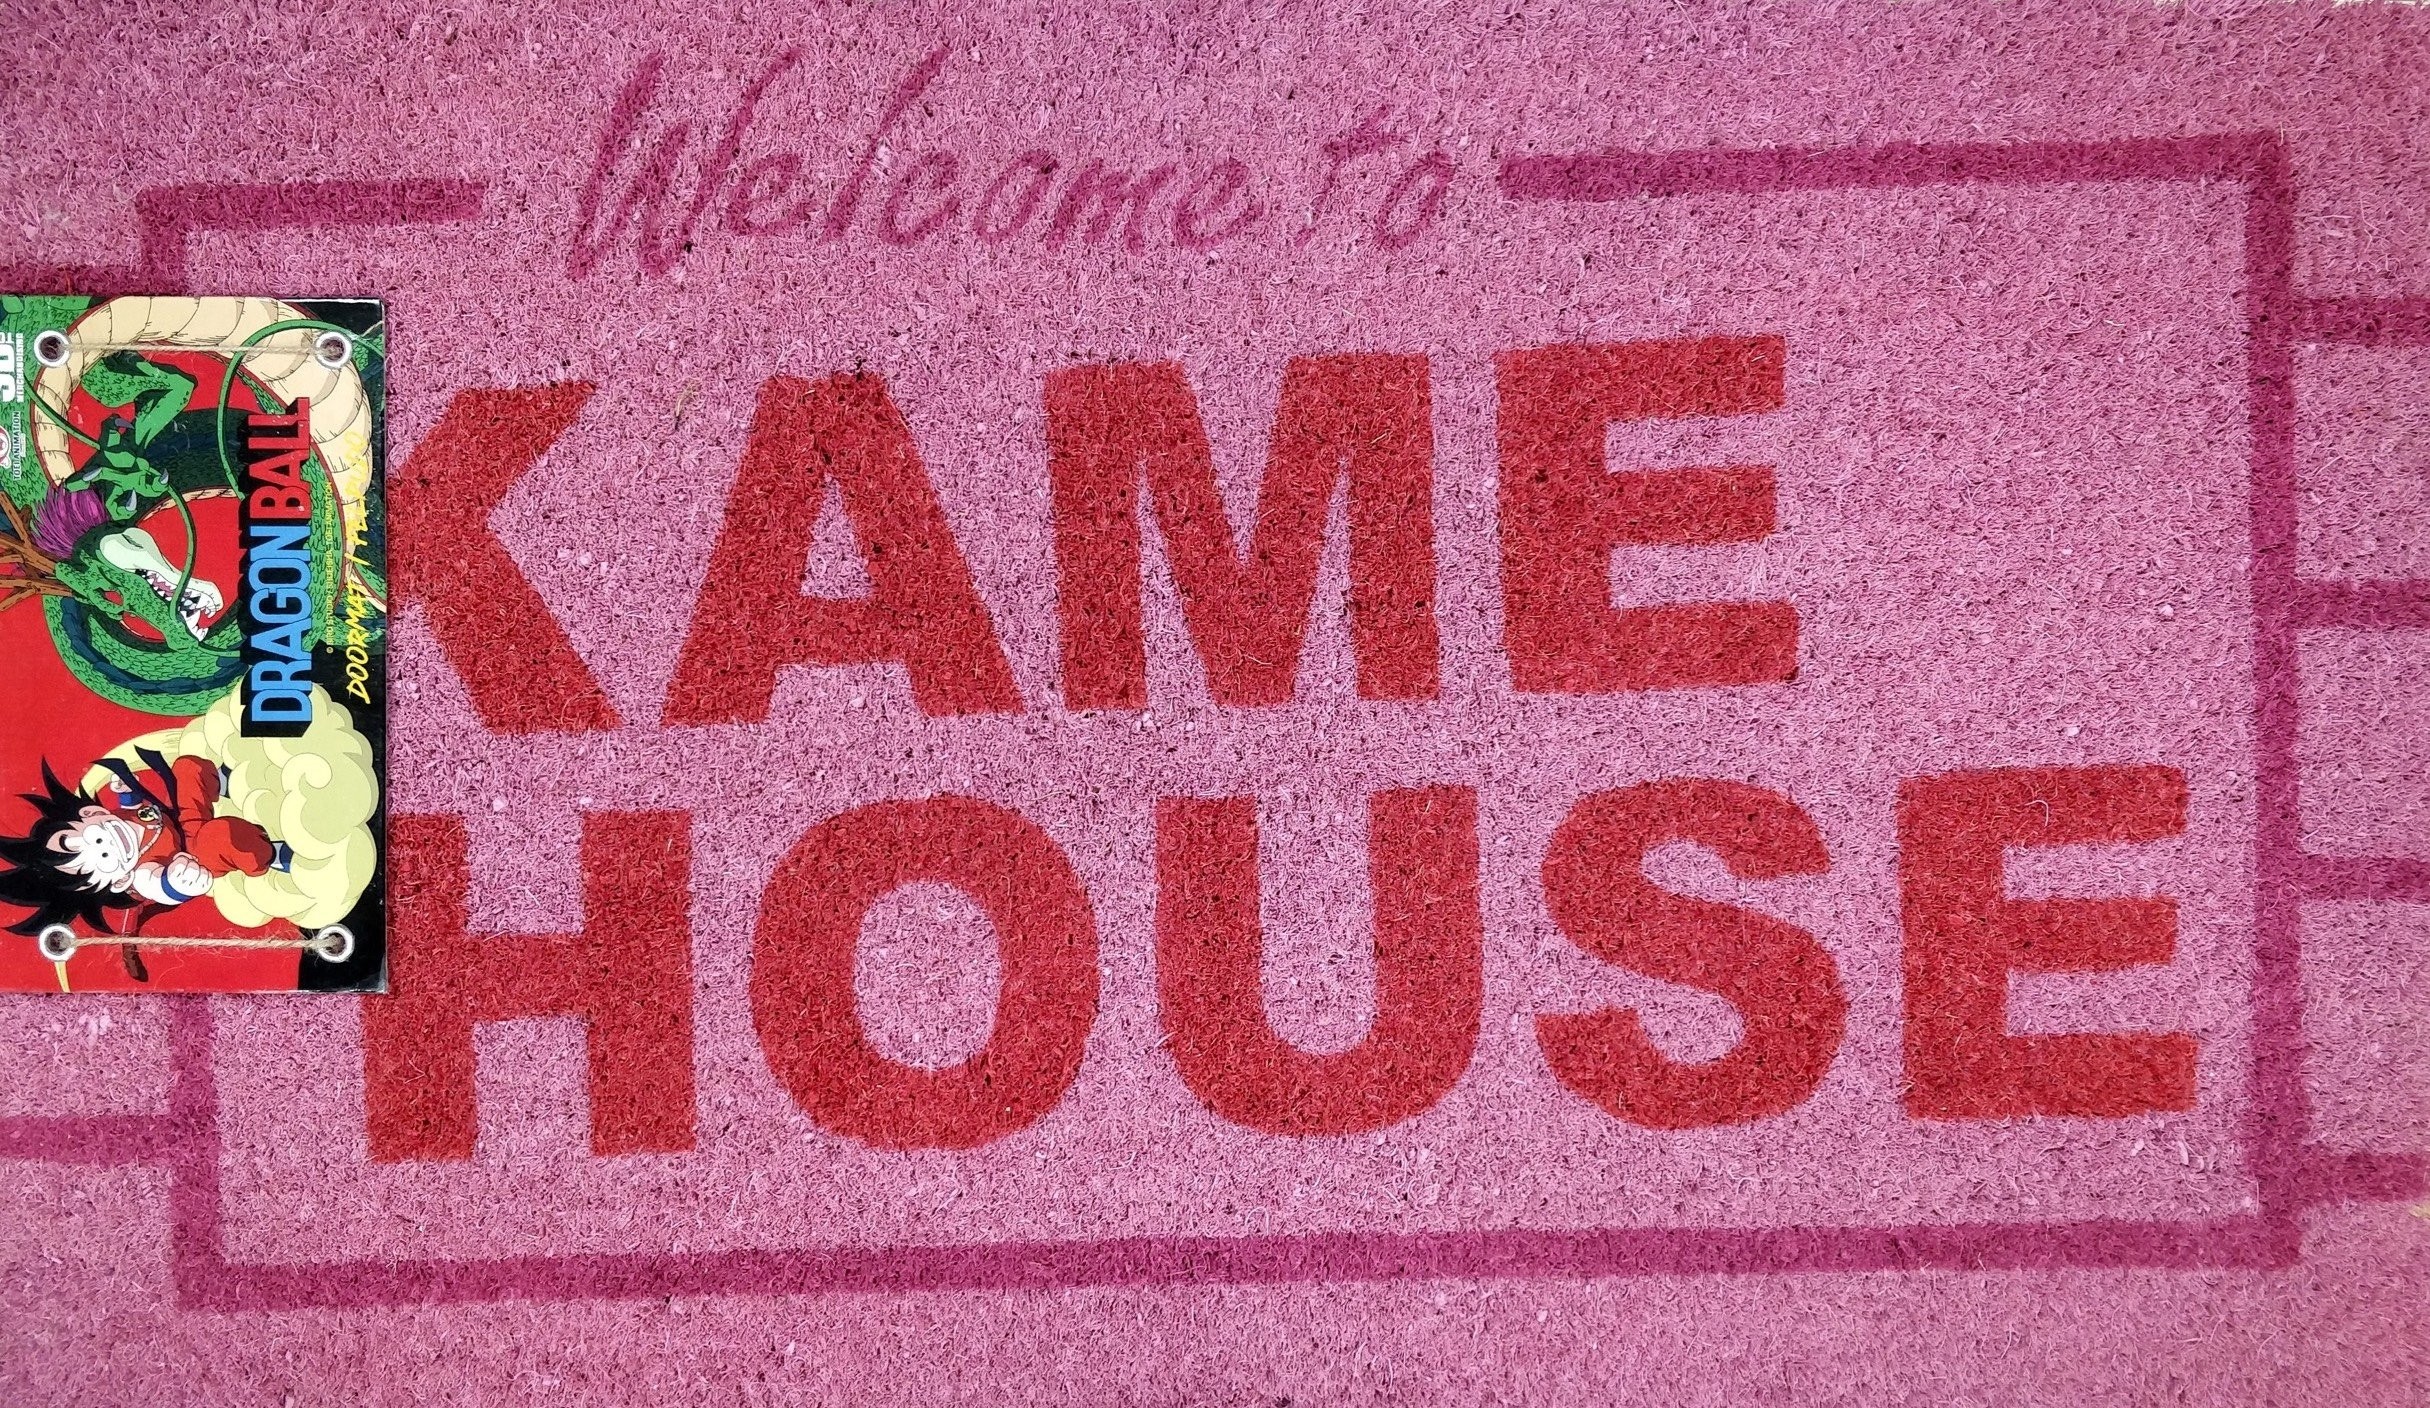 Dragon Ball Kame House Doormat